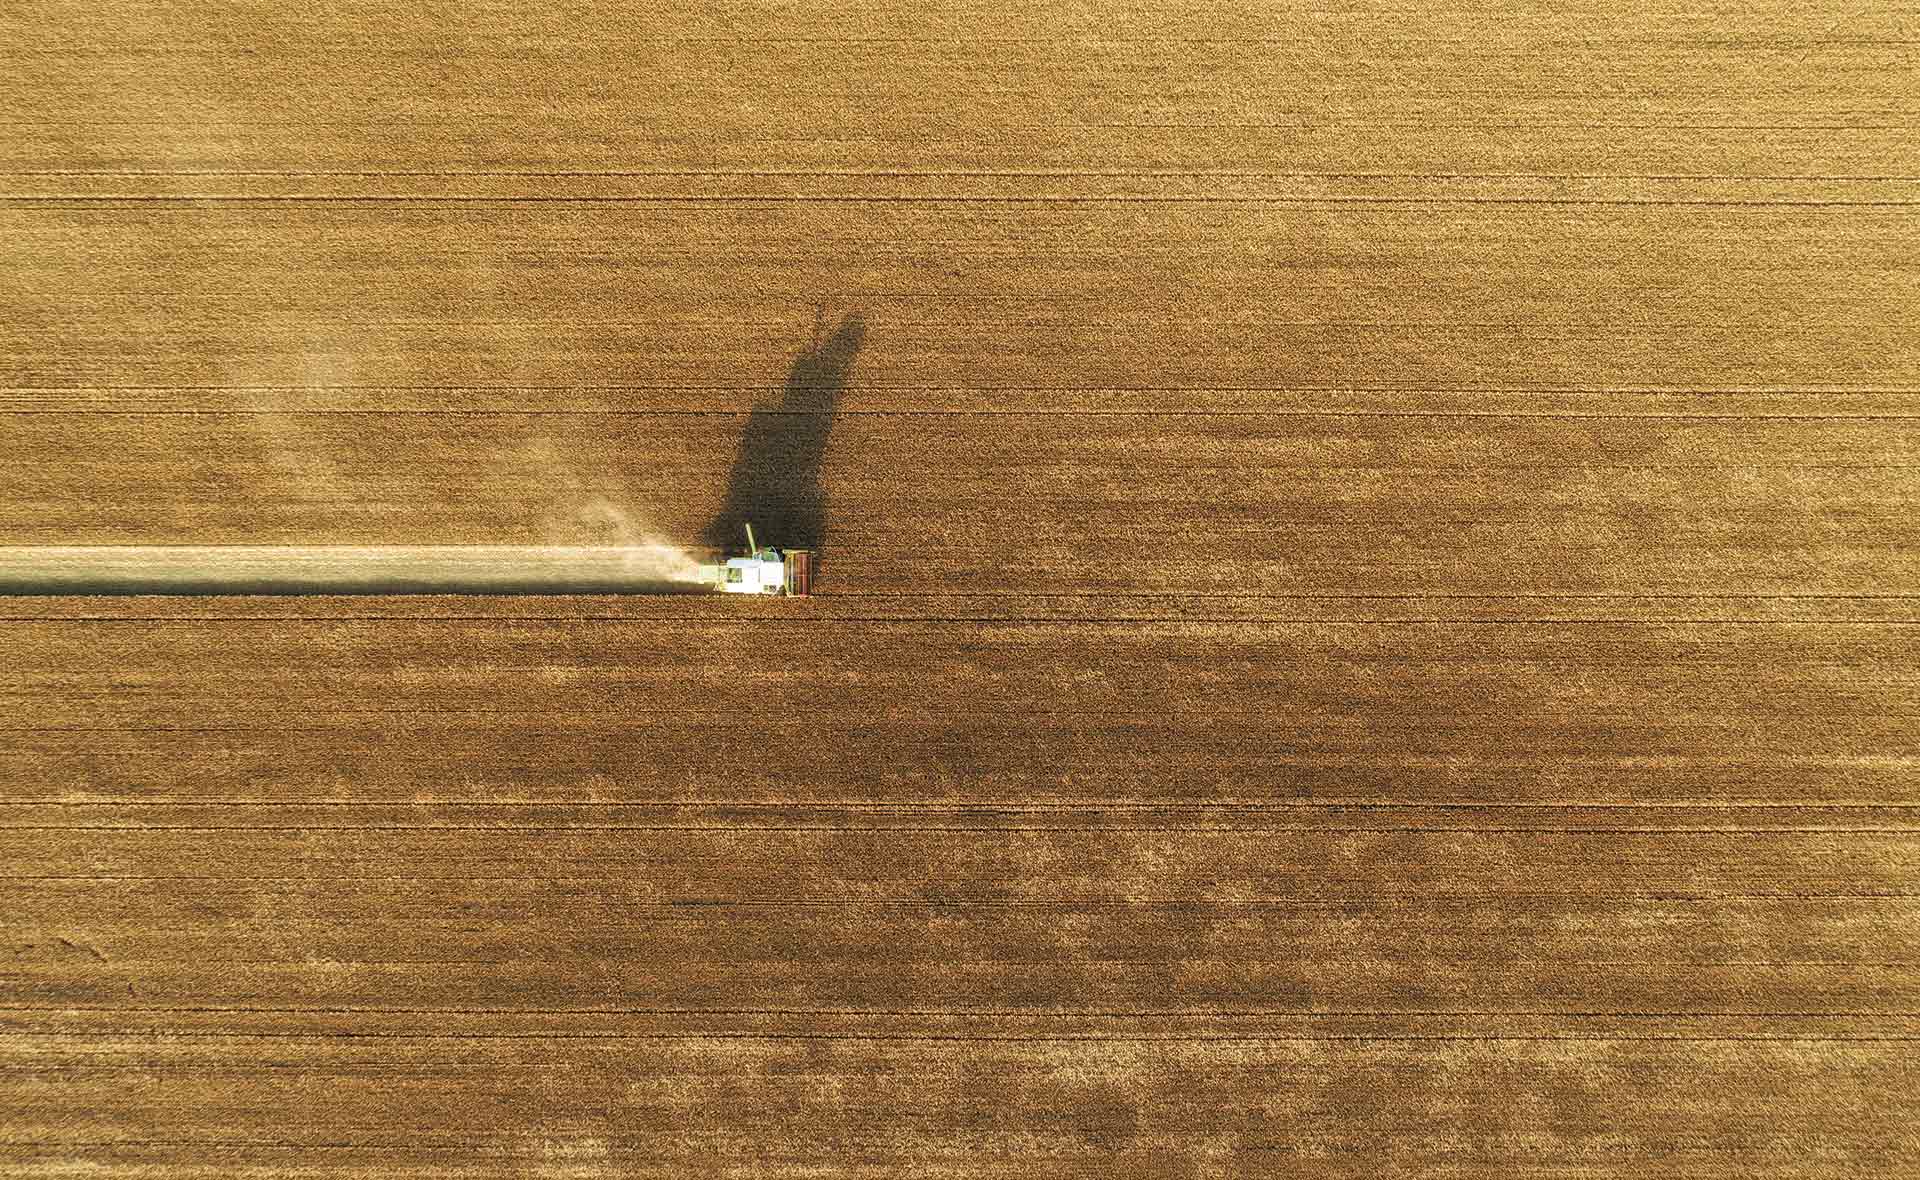 drones-agricultura-precision-BBVA-sostenibilidad